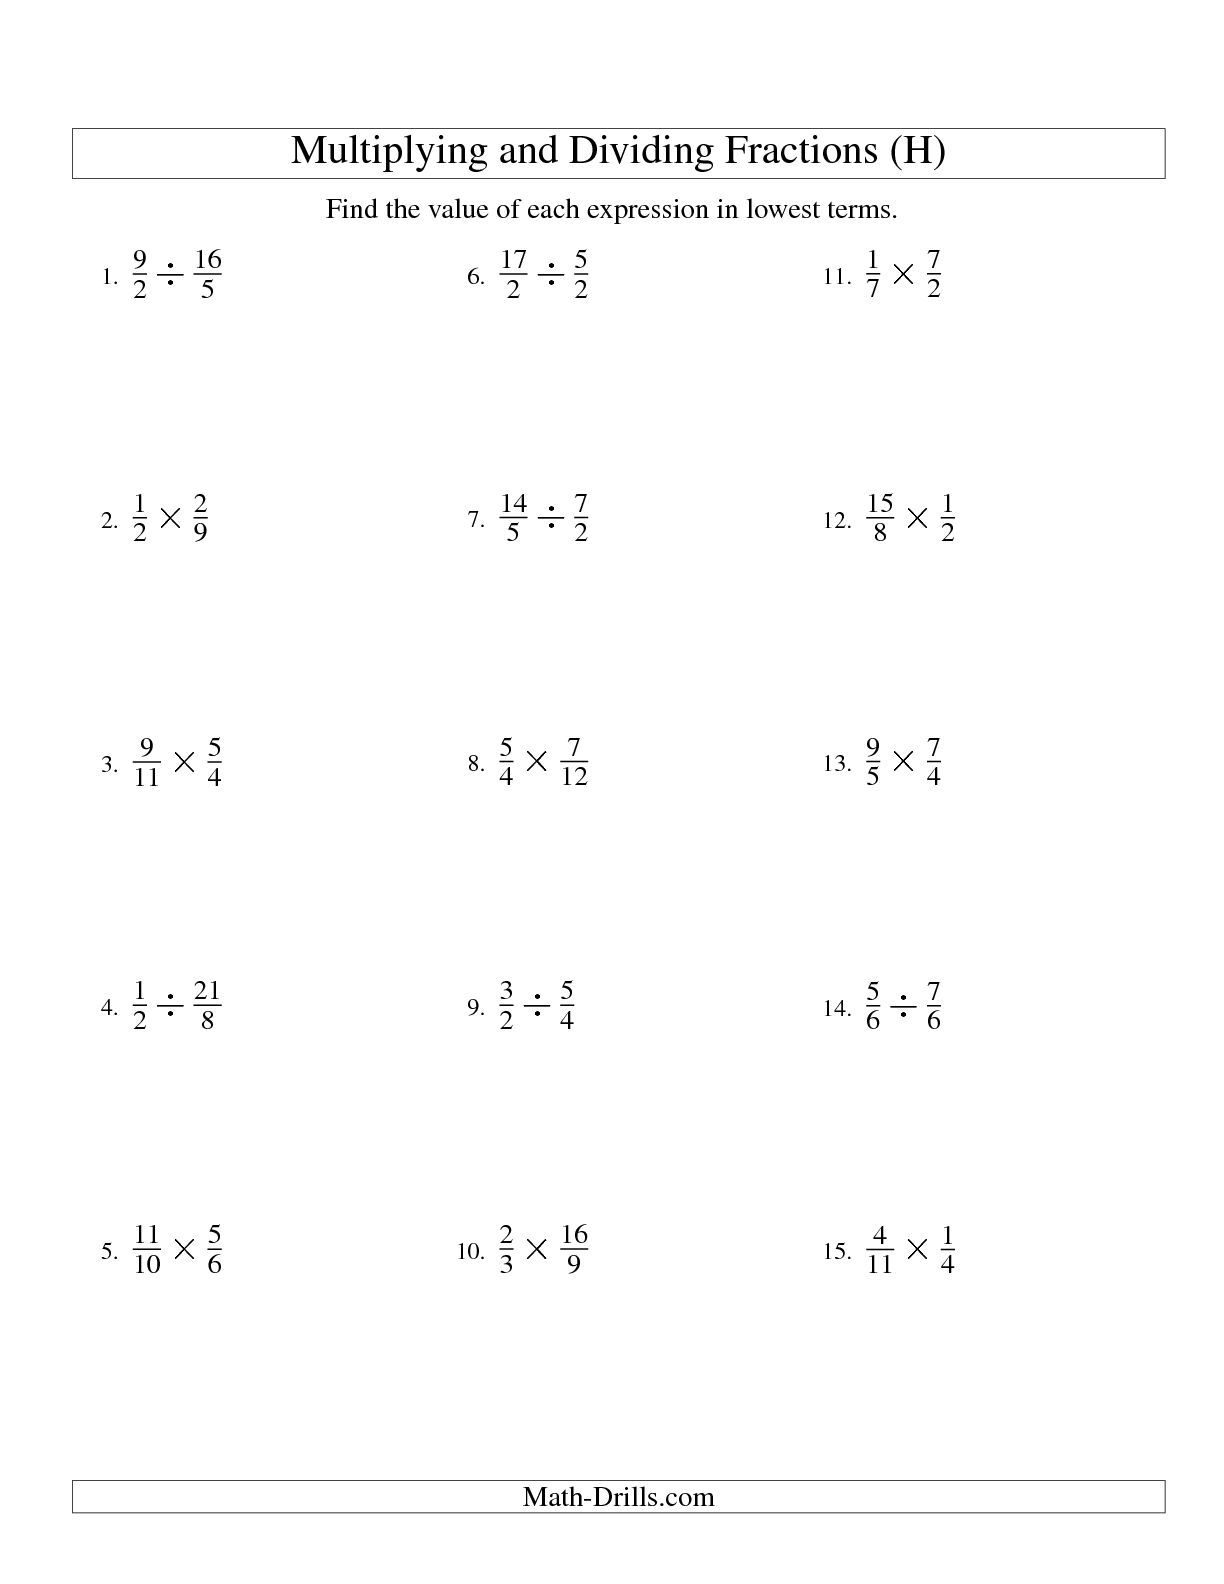 Multiplying Fractions Worksheets Image